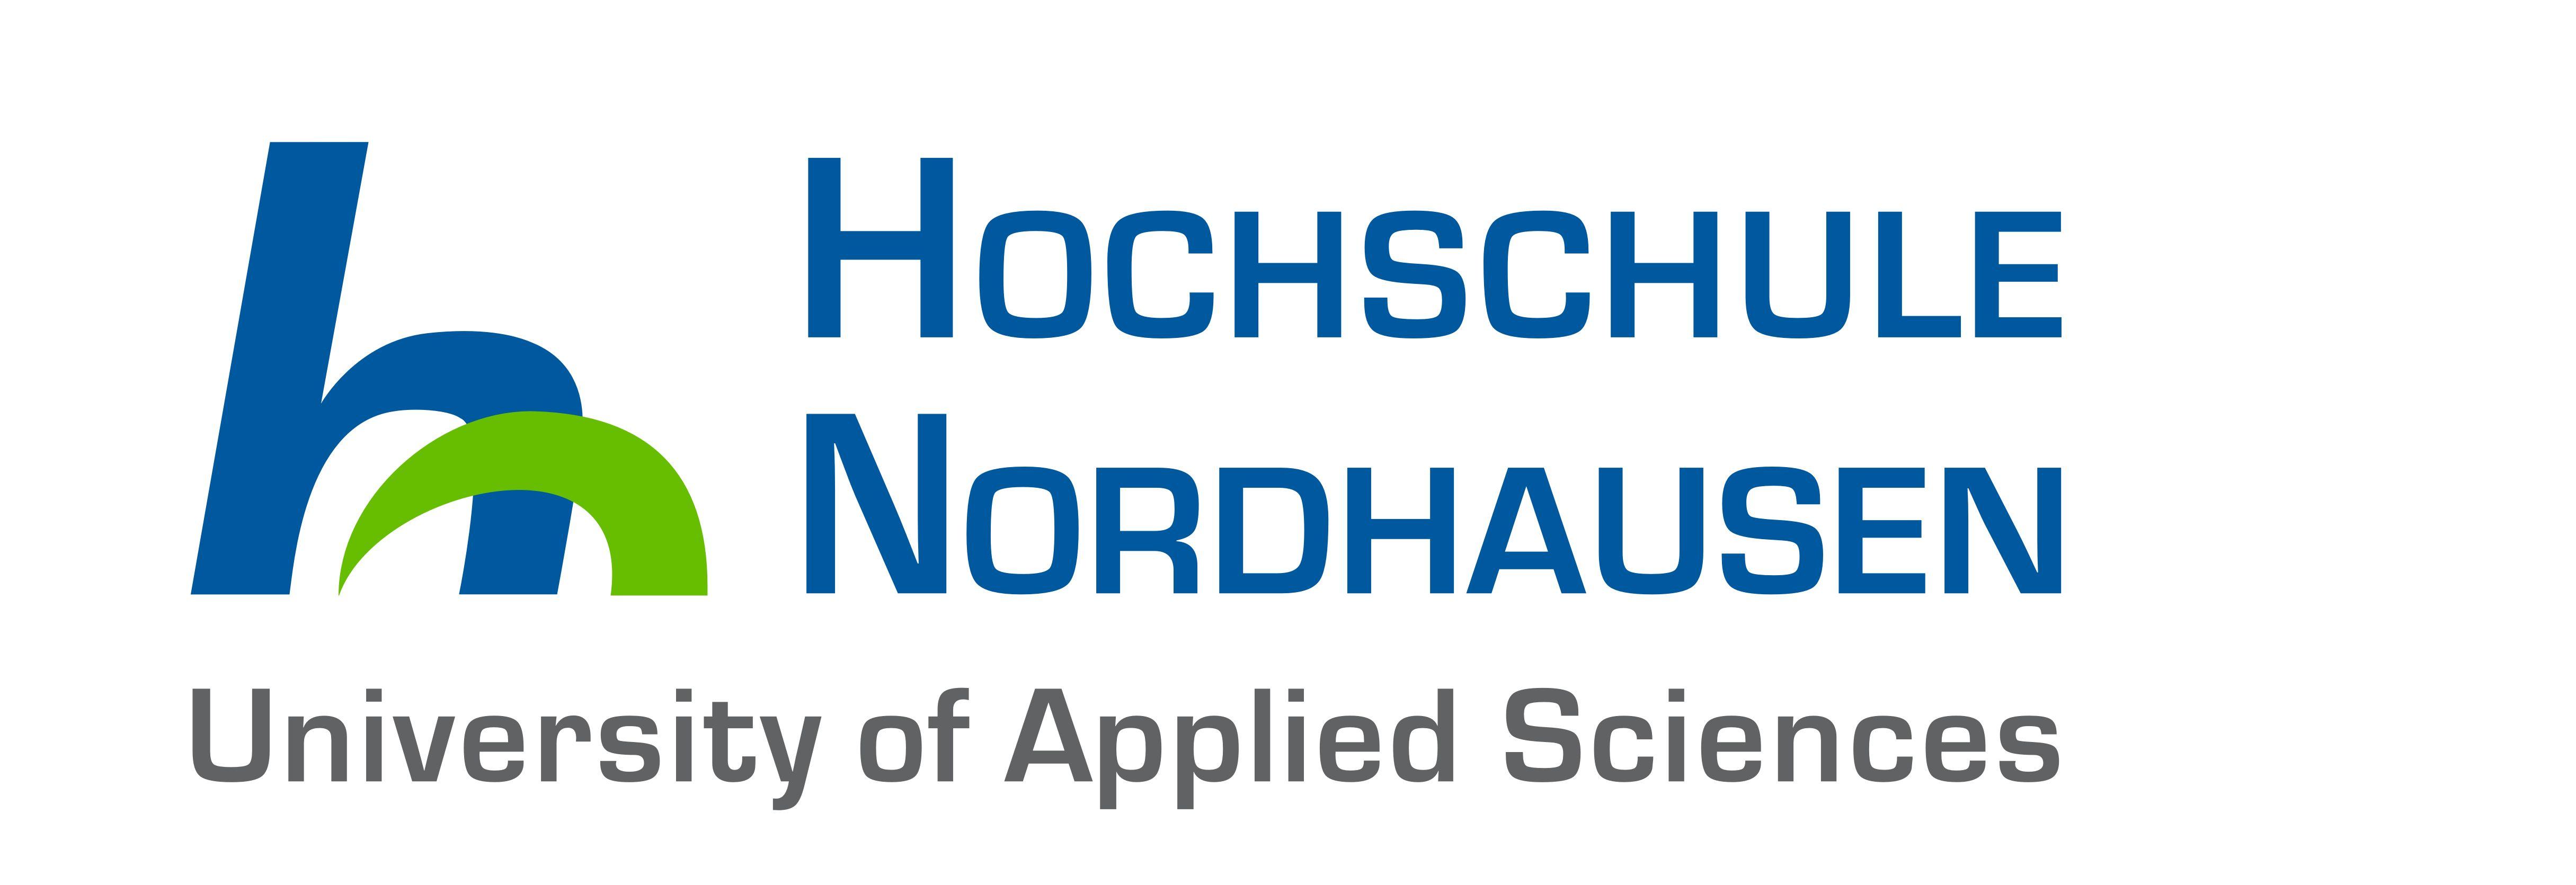 HSN Logo - File:Logo HSN zweizeilig RGB.jpg - Wikimedia Commons